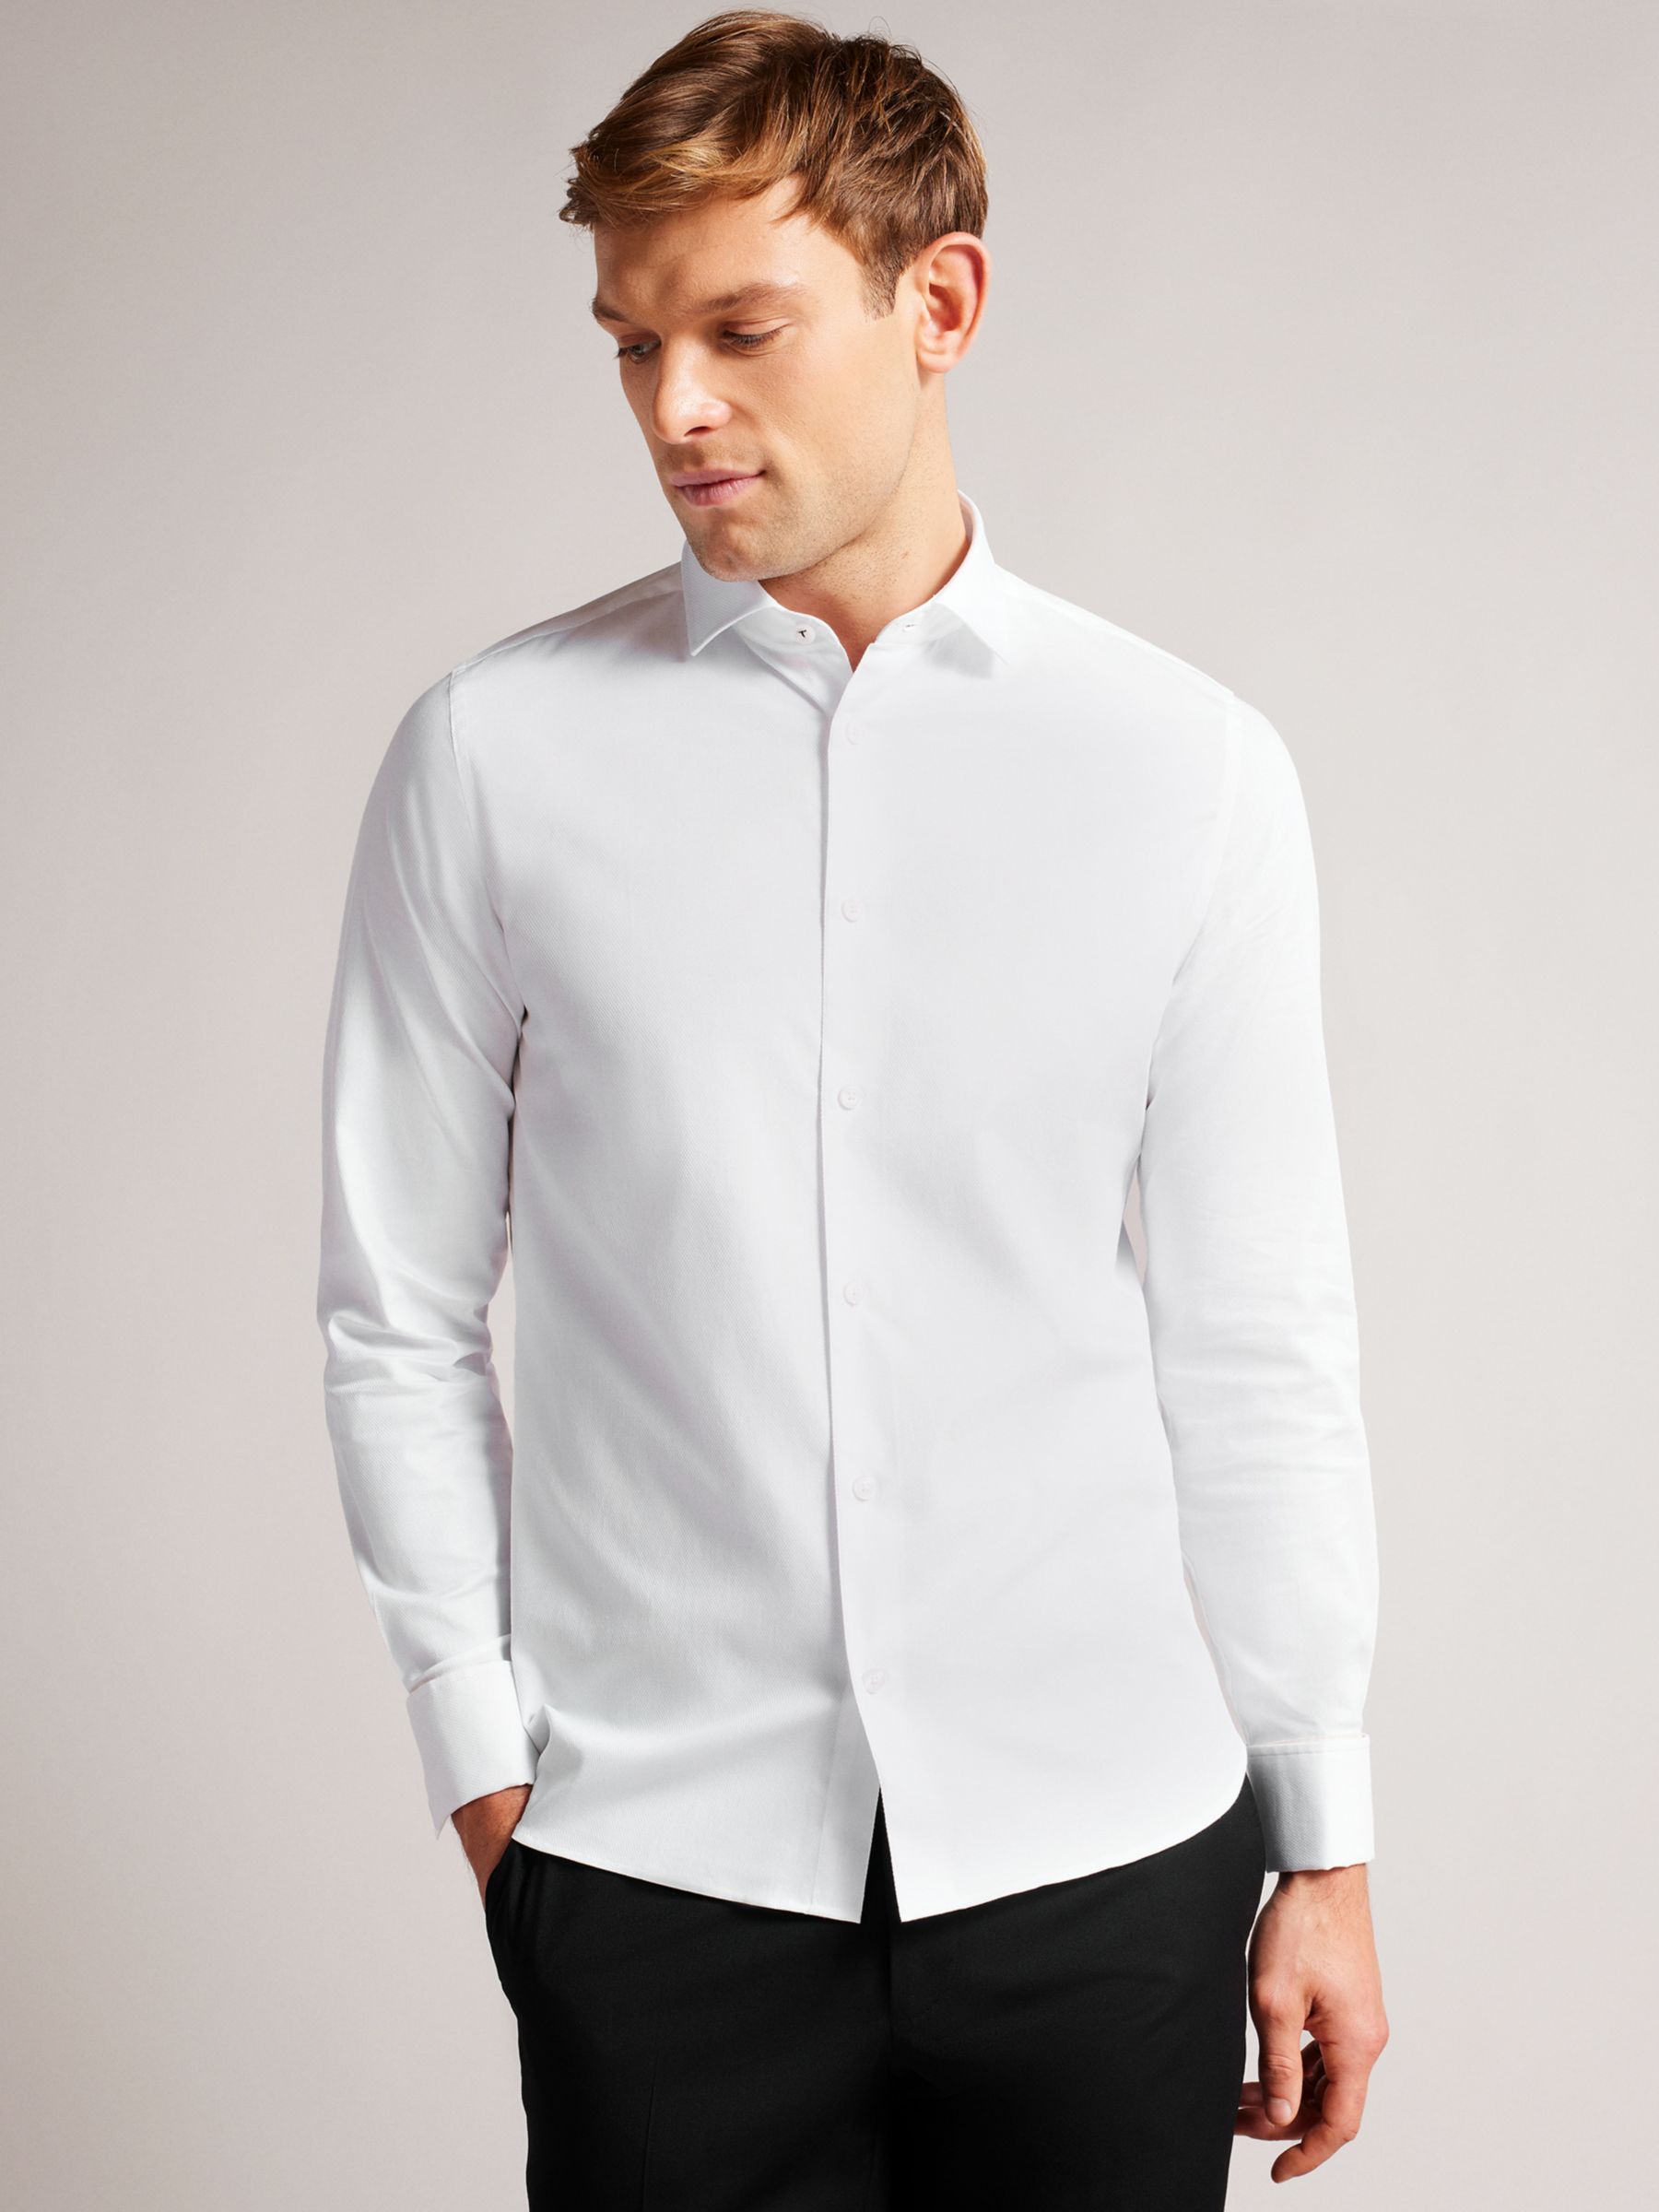 Ted Baker Witree Regular Fit Plain Shirt, White at John Lewis & Partners